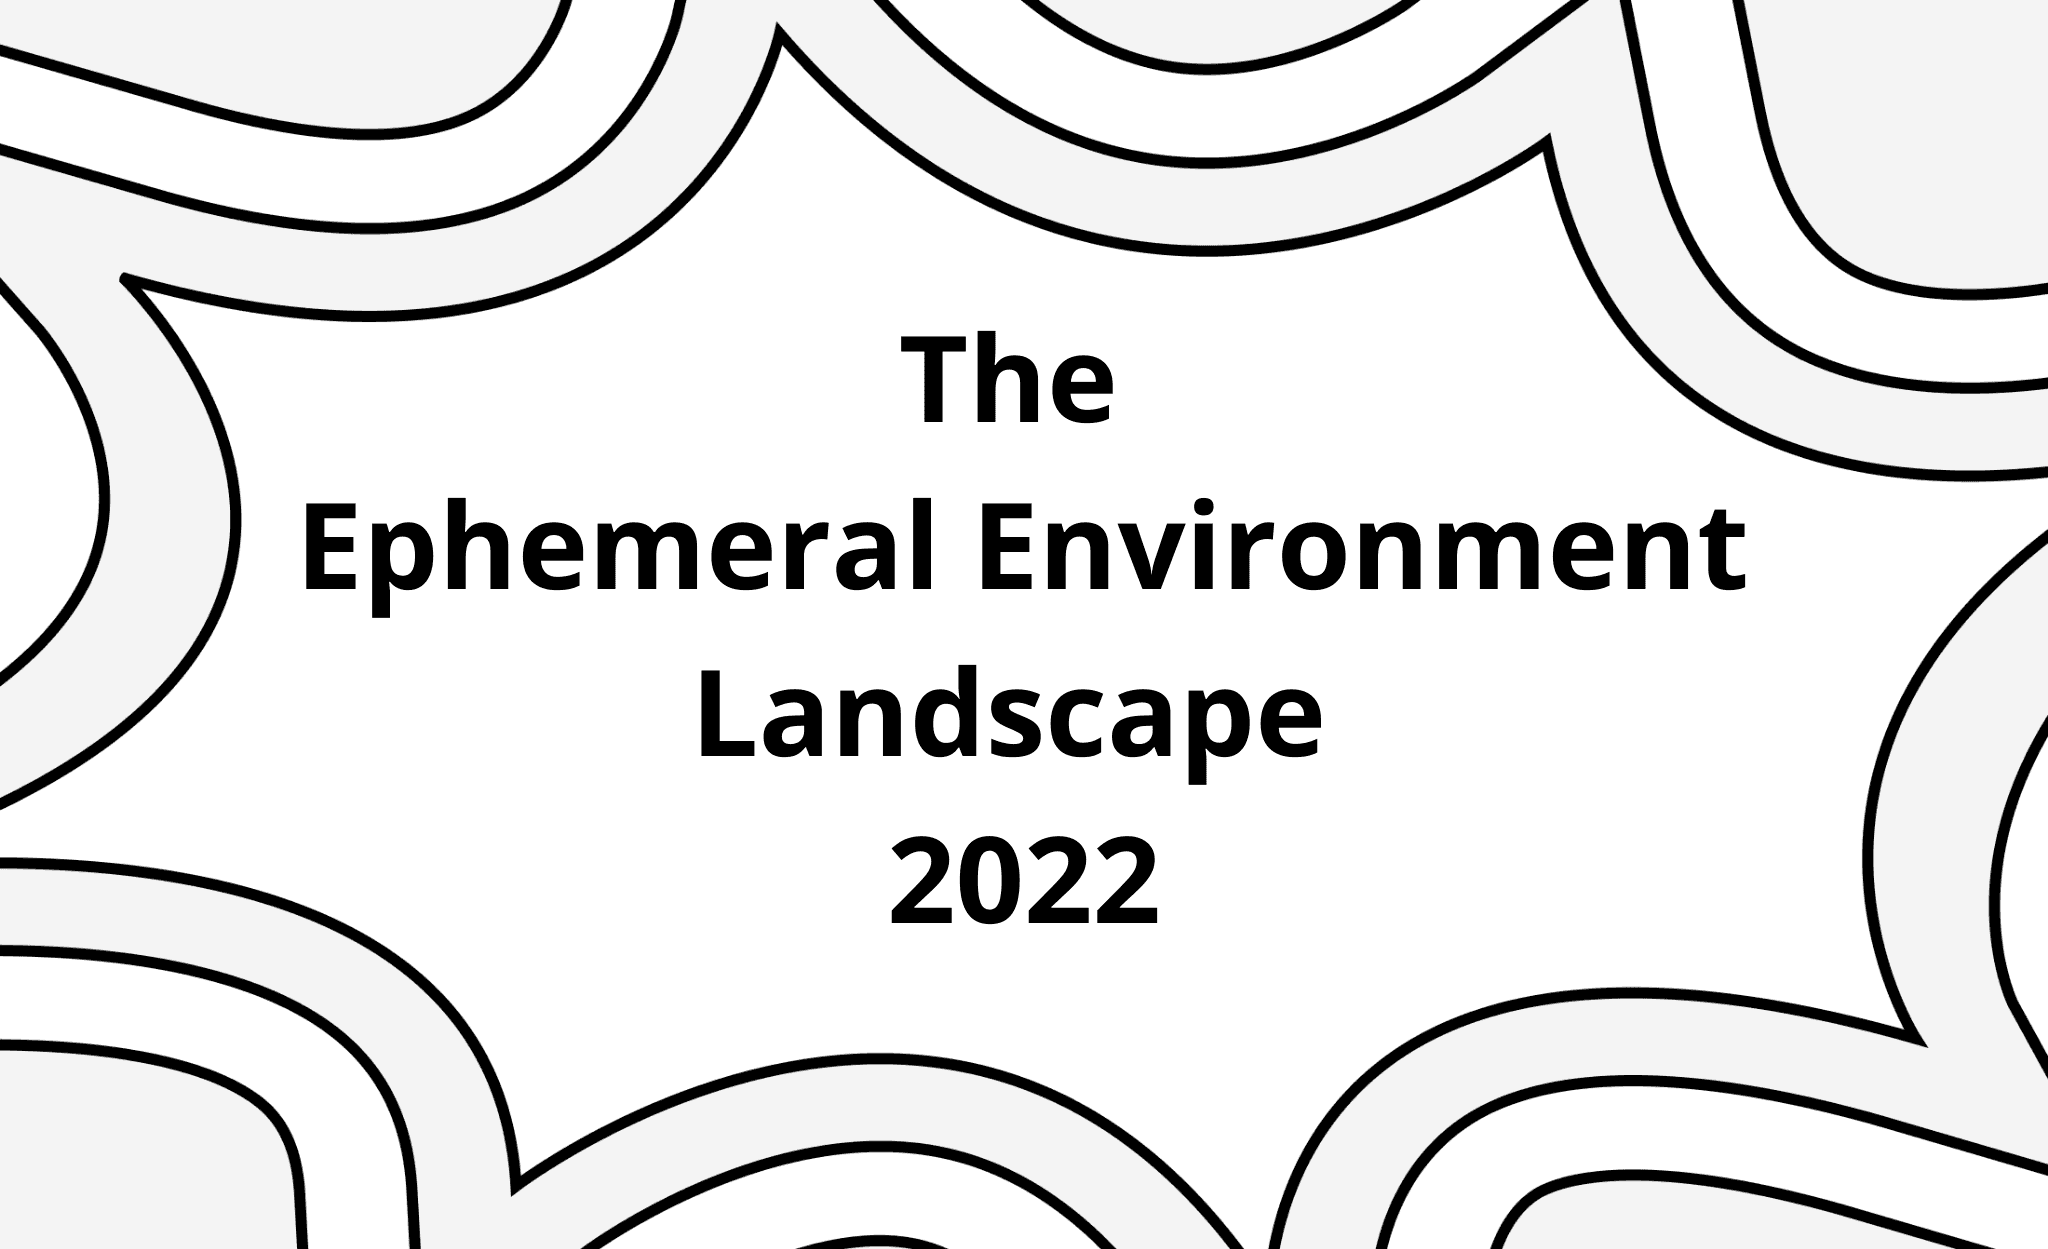 The Ephemeral Environment Landscape: 2022